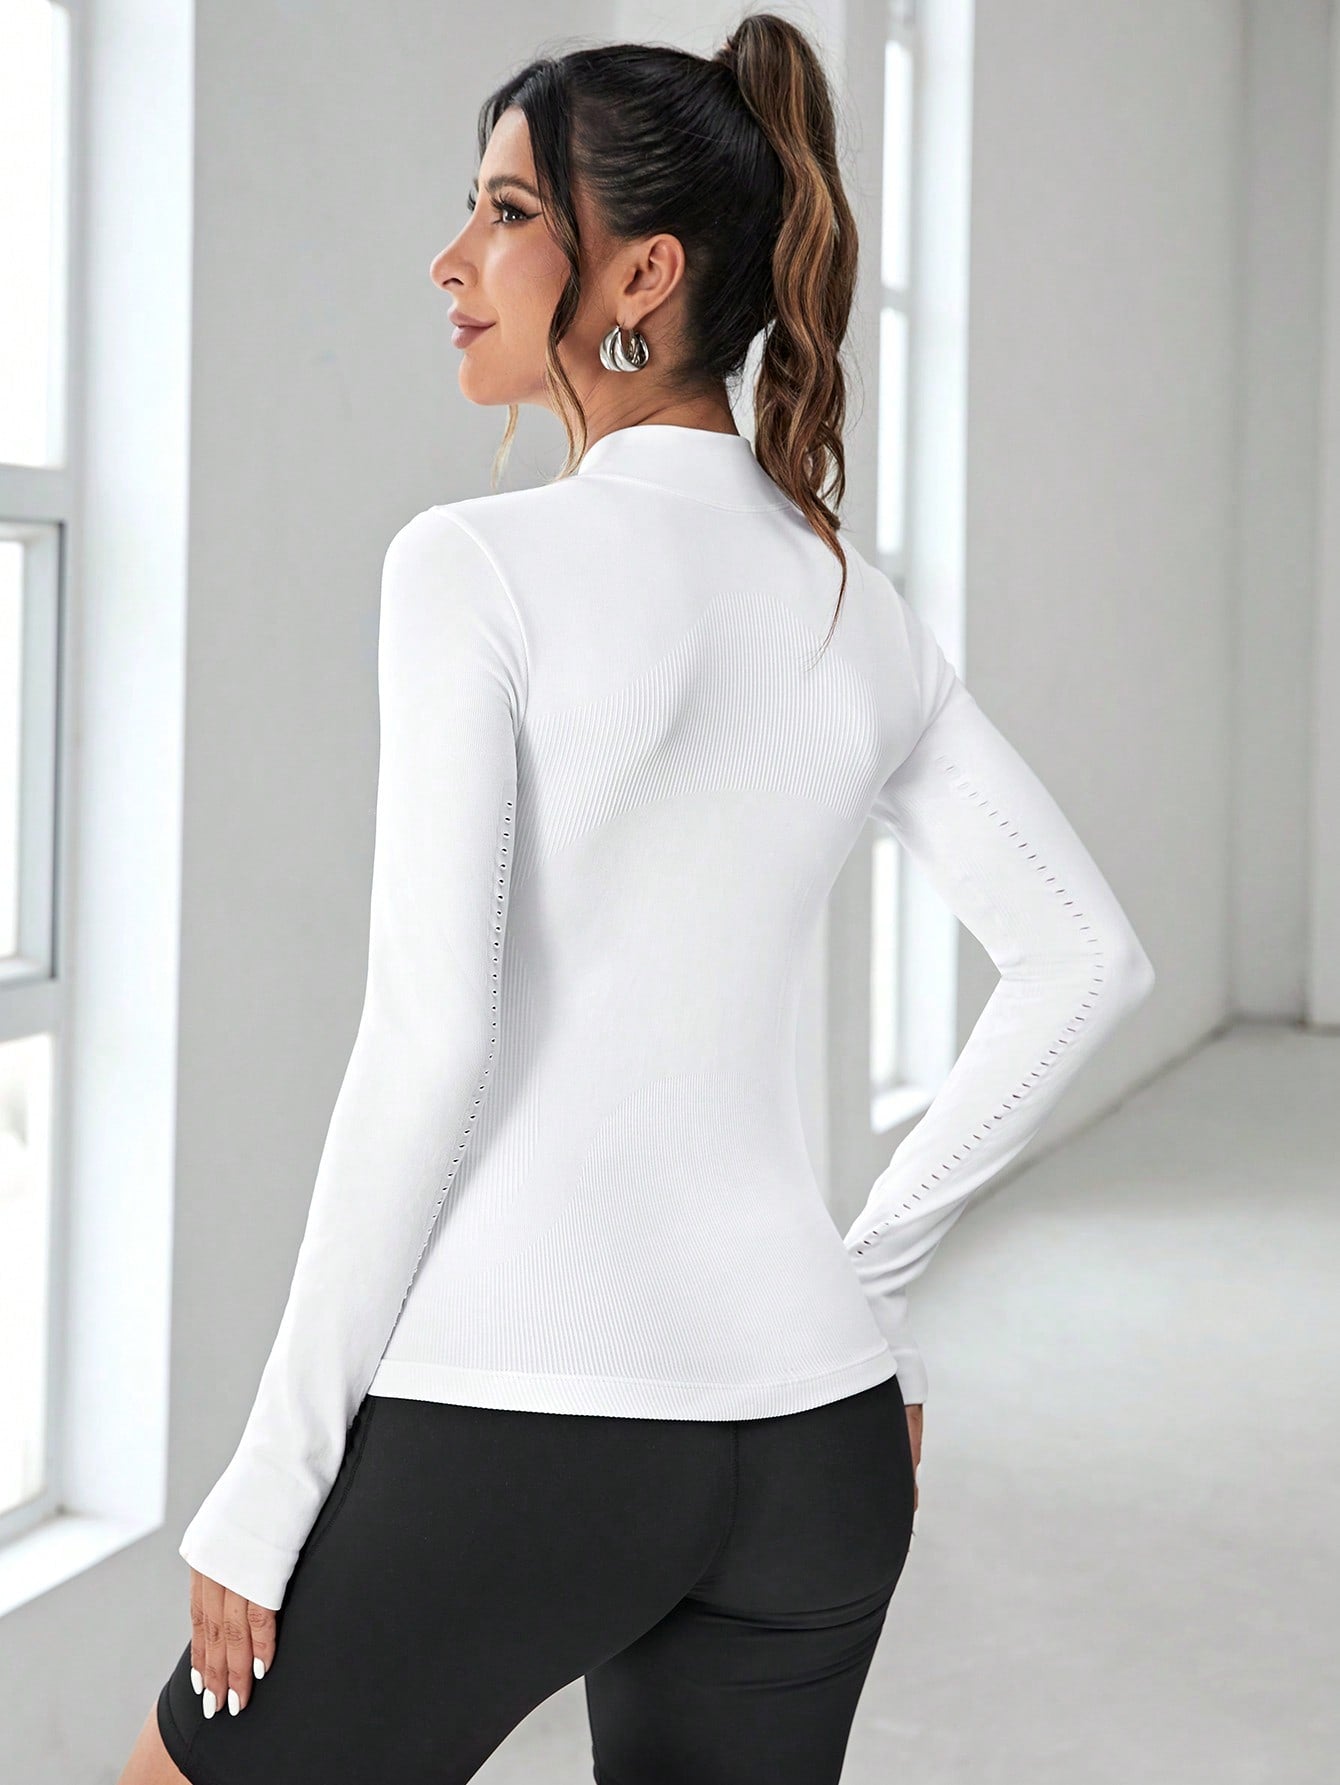 Yoga Basic Zip Up Seamless Sports Jacket workout clothes